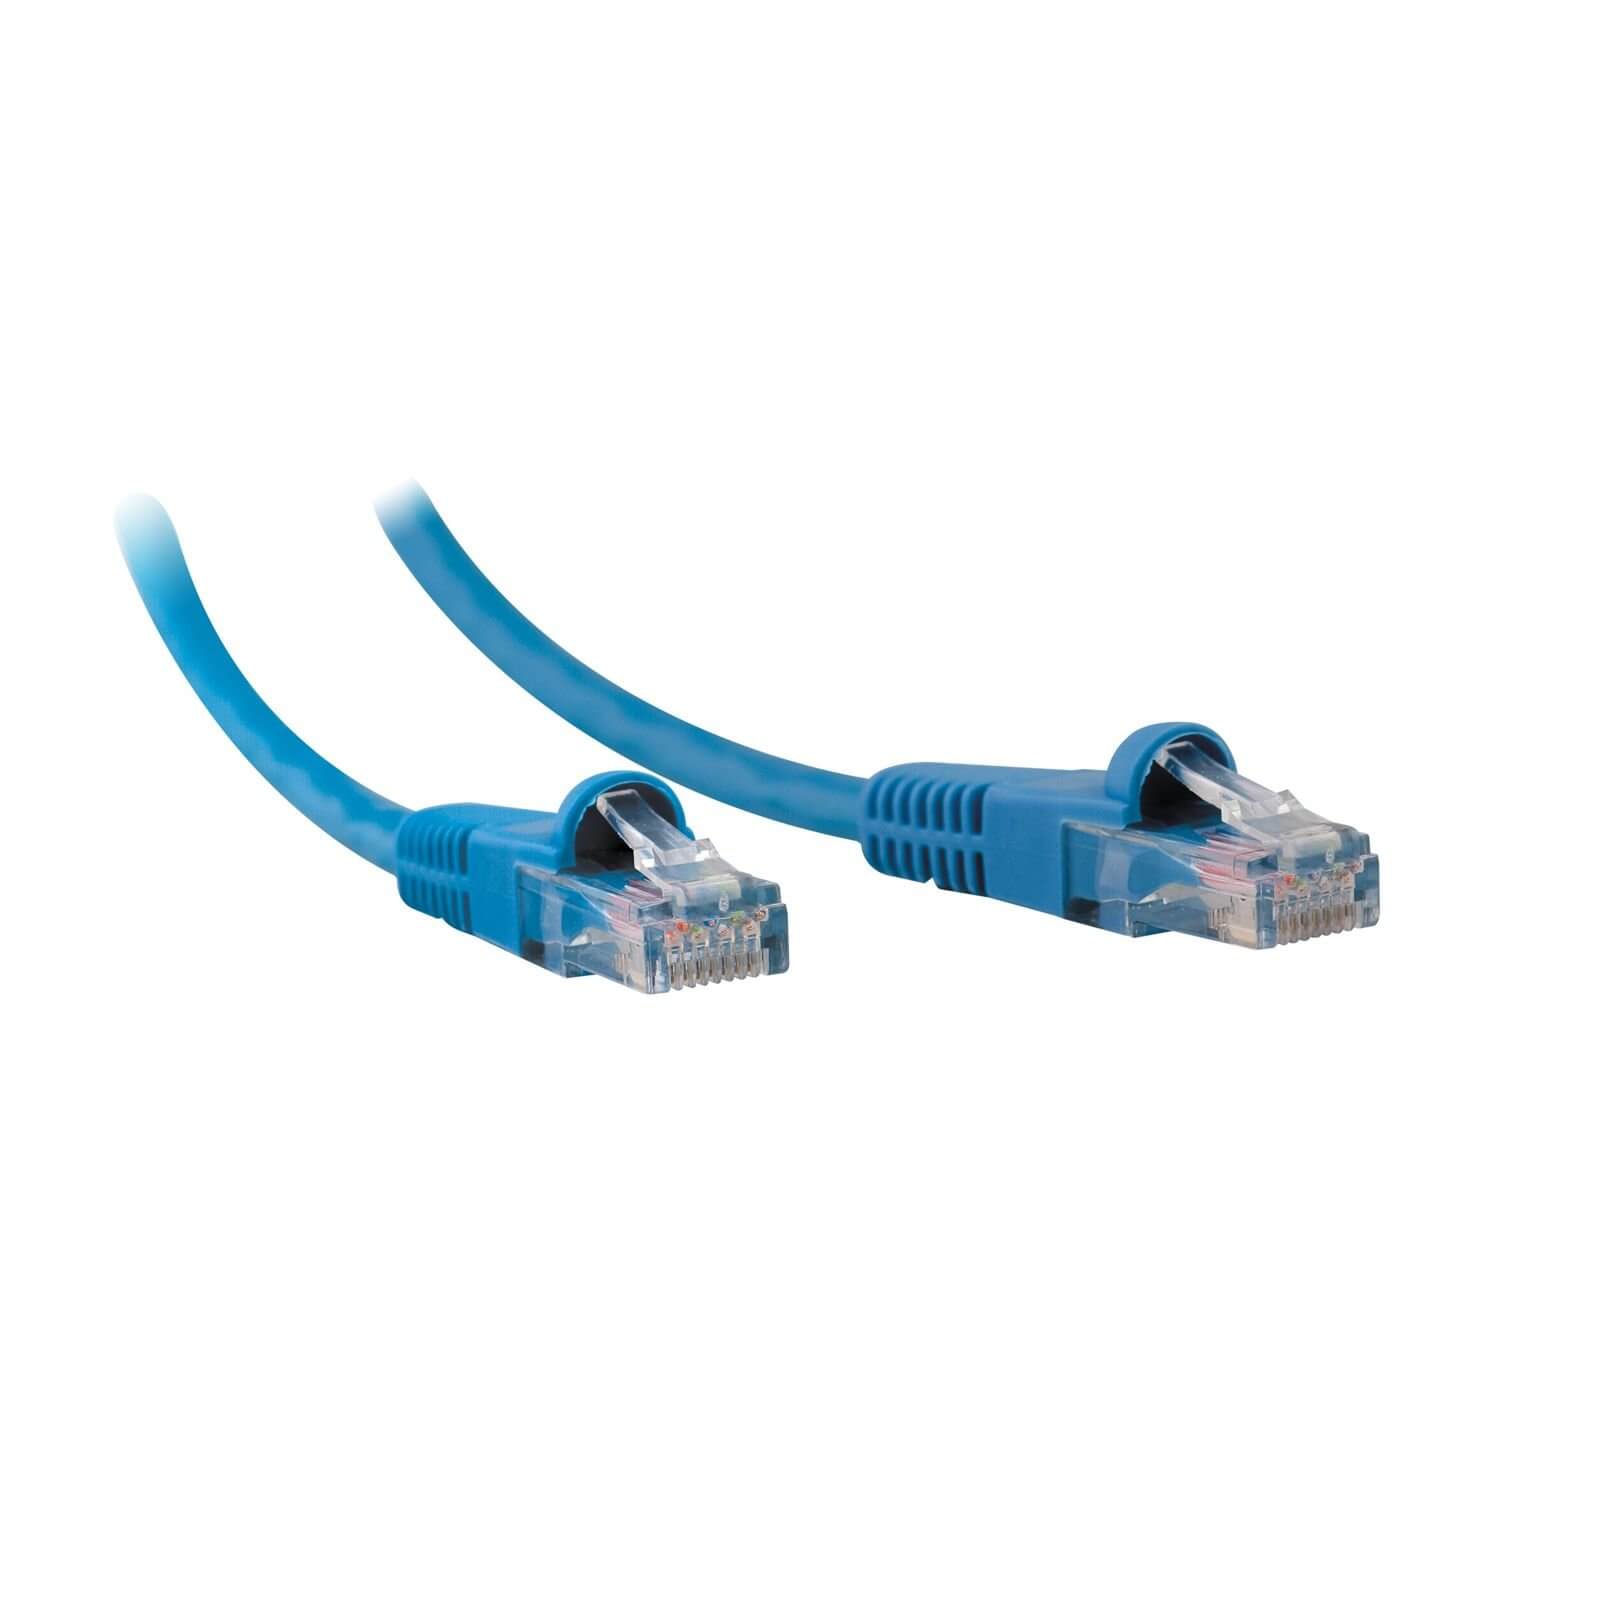 Antsig CAT6 Ethernet Cable 10m Blue